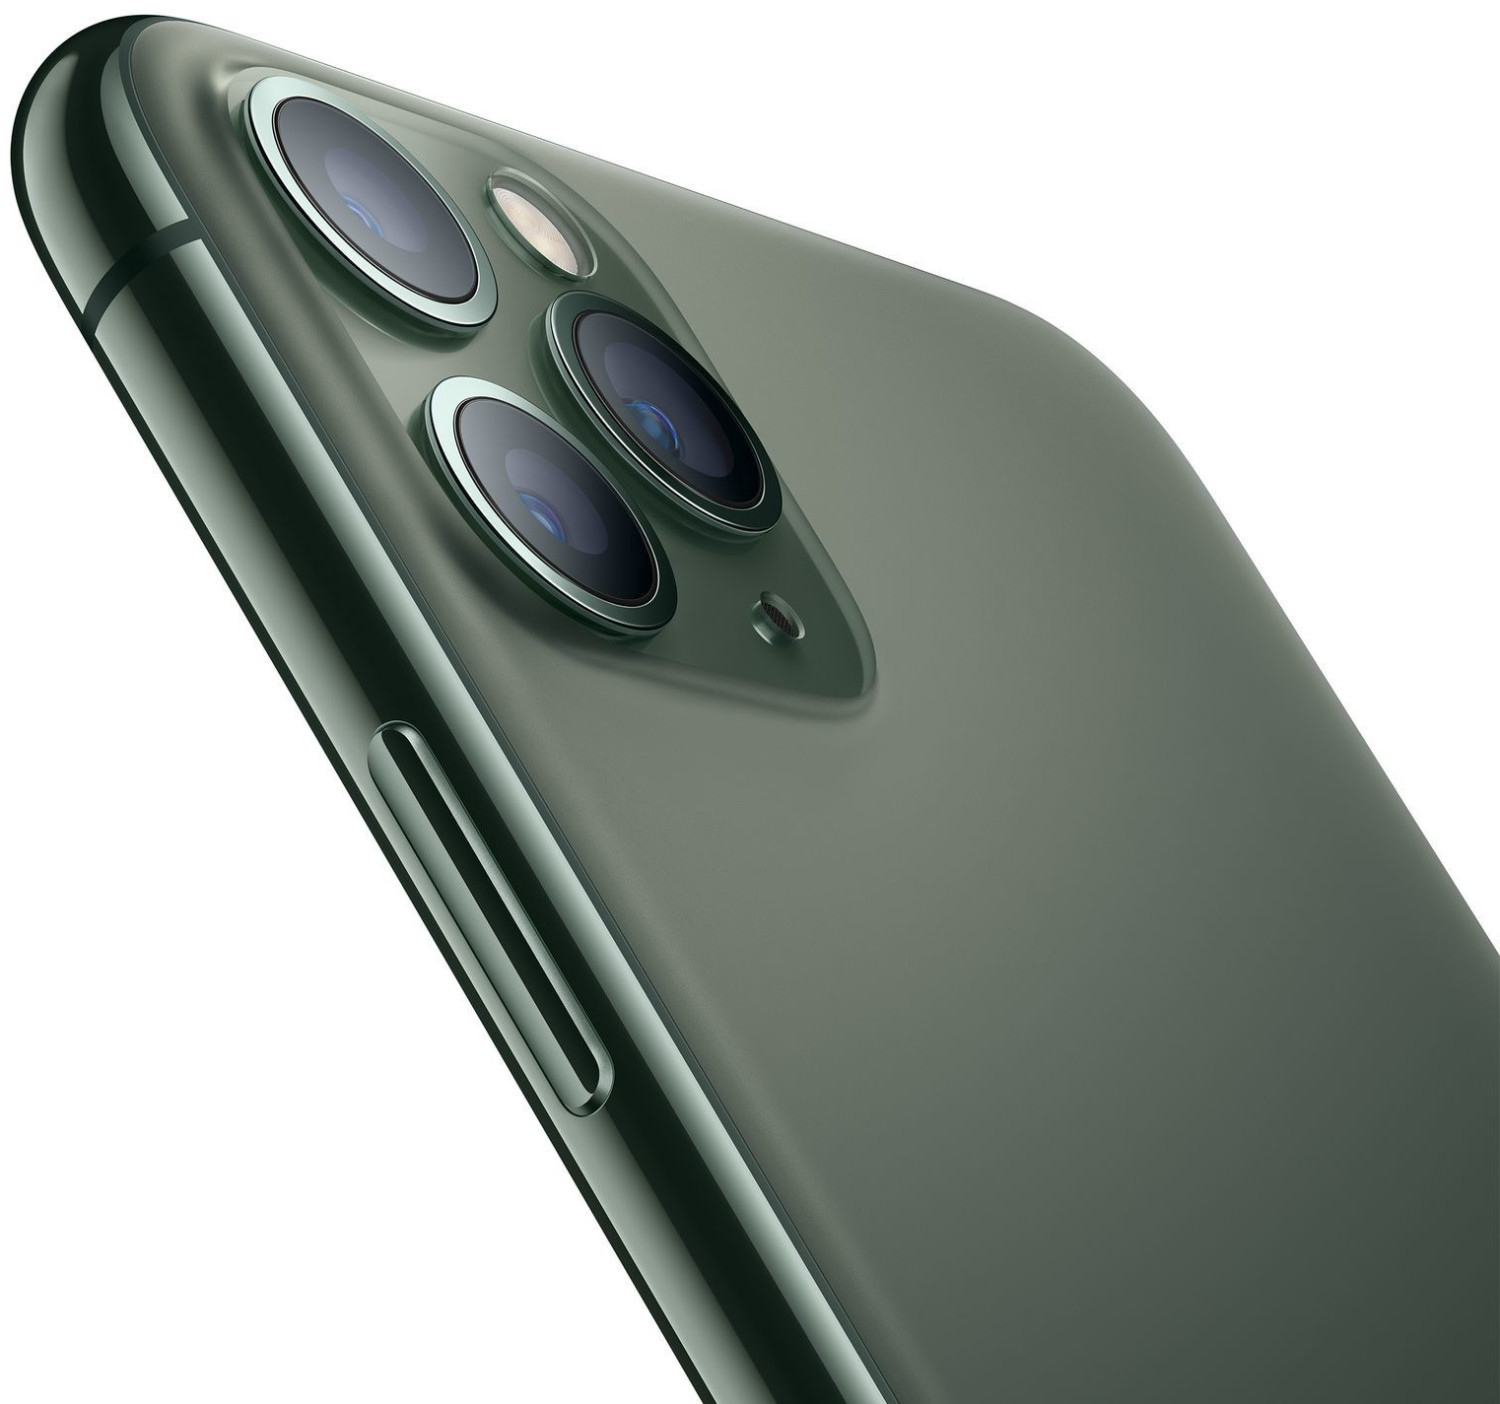 Alquila Apple iPhone 11 Pro - 64GB - Dual Sim desde 22,90 € al mes